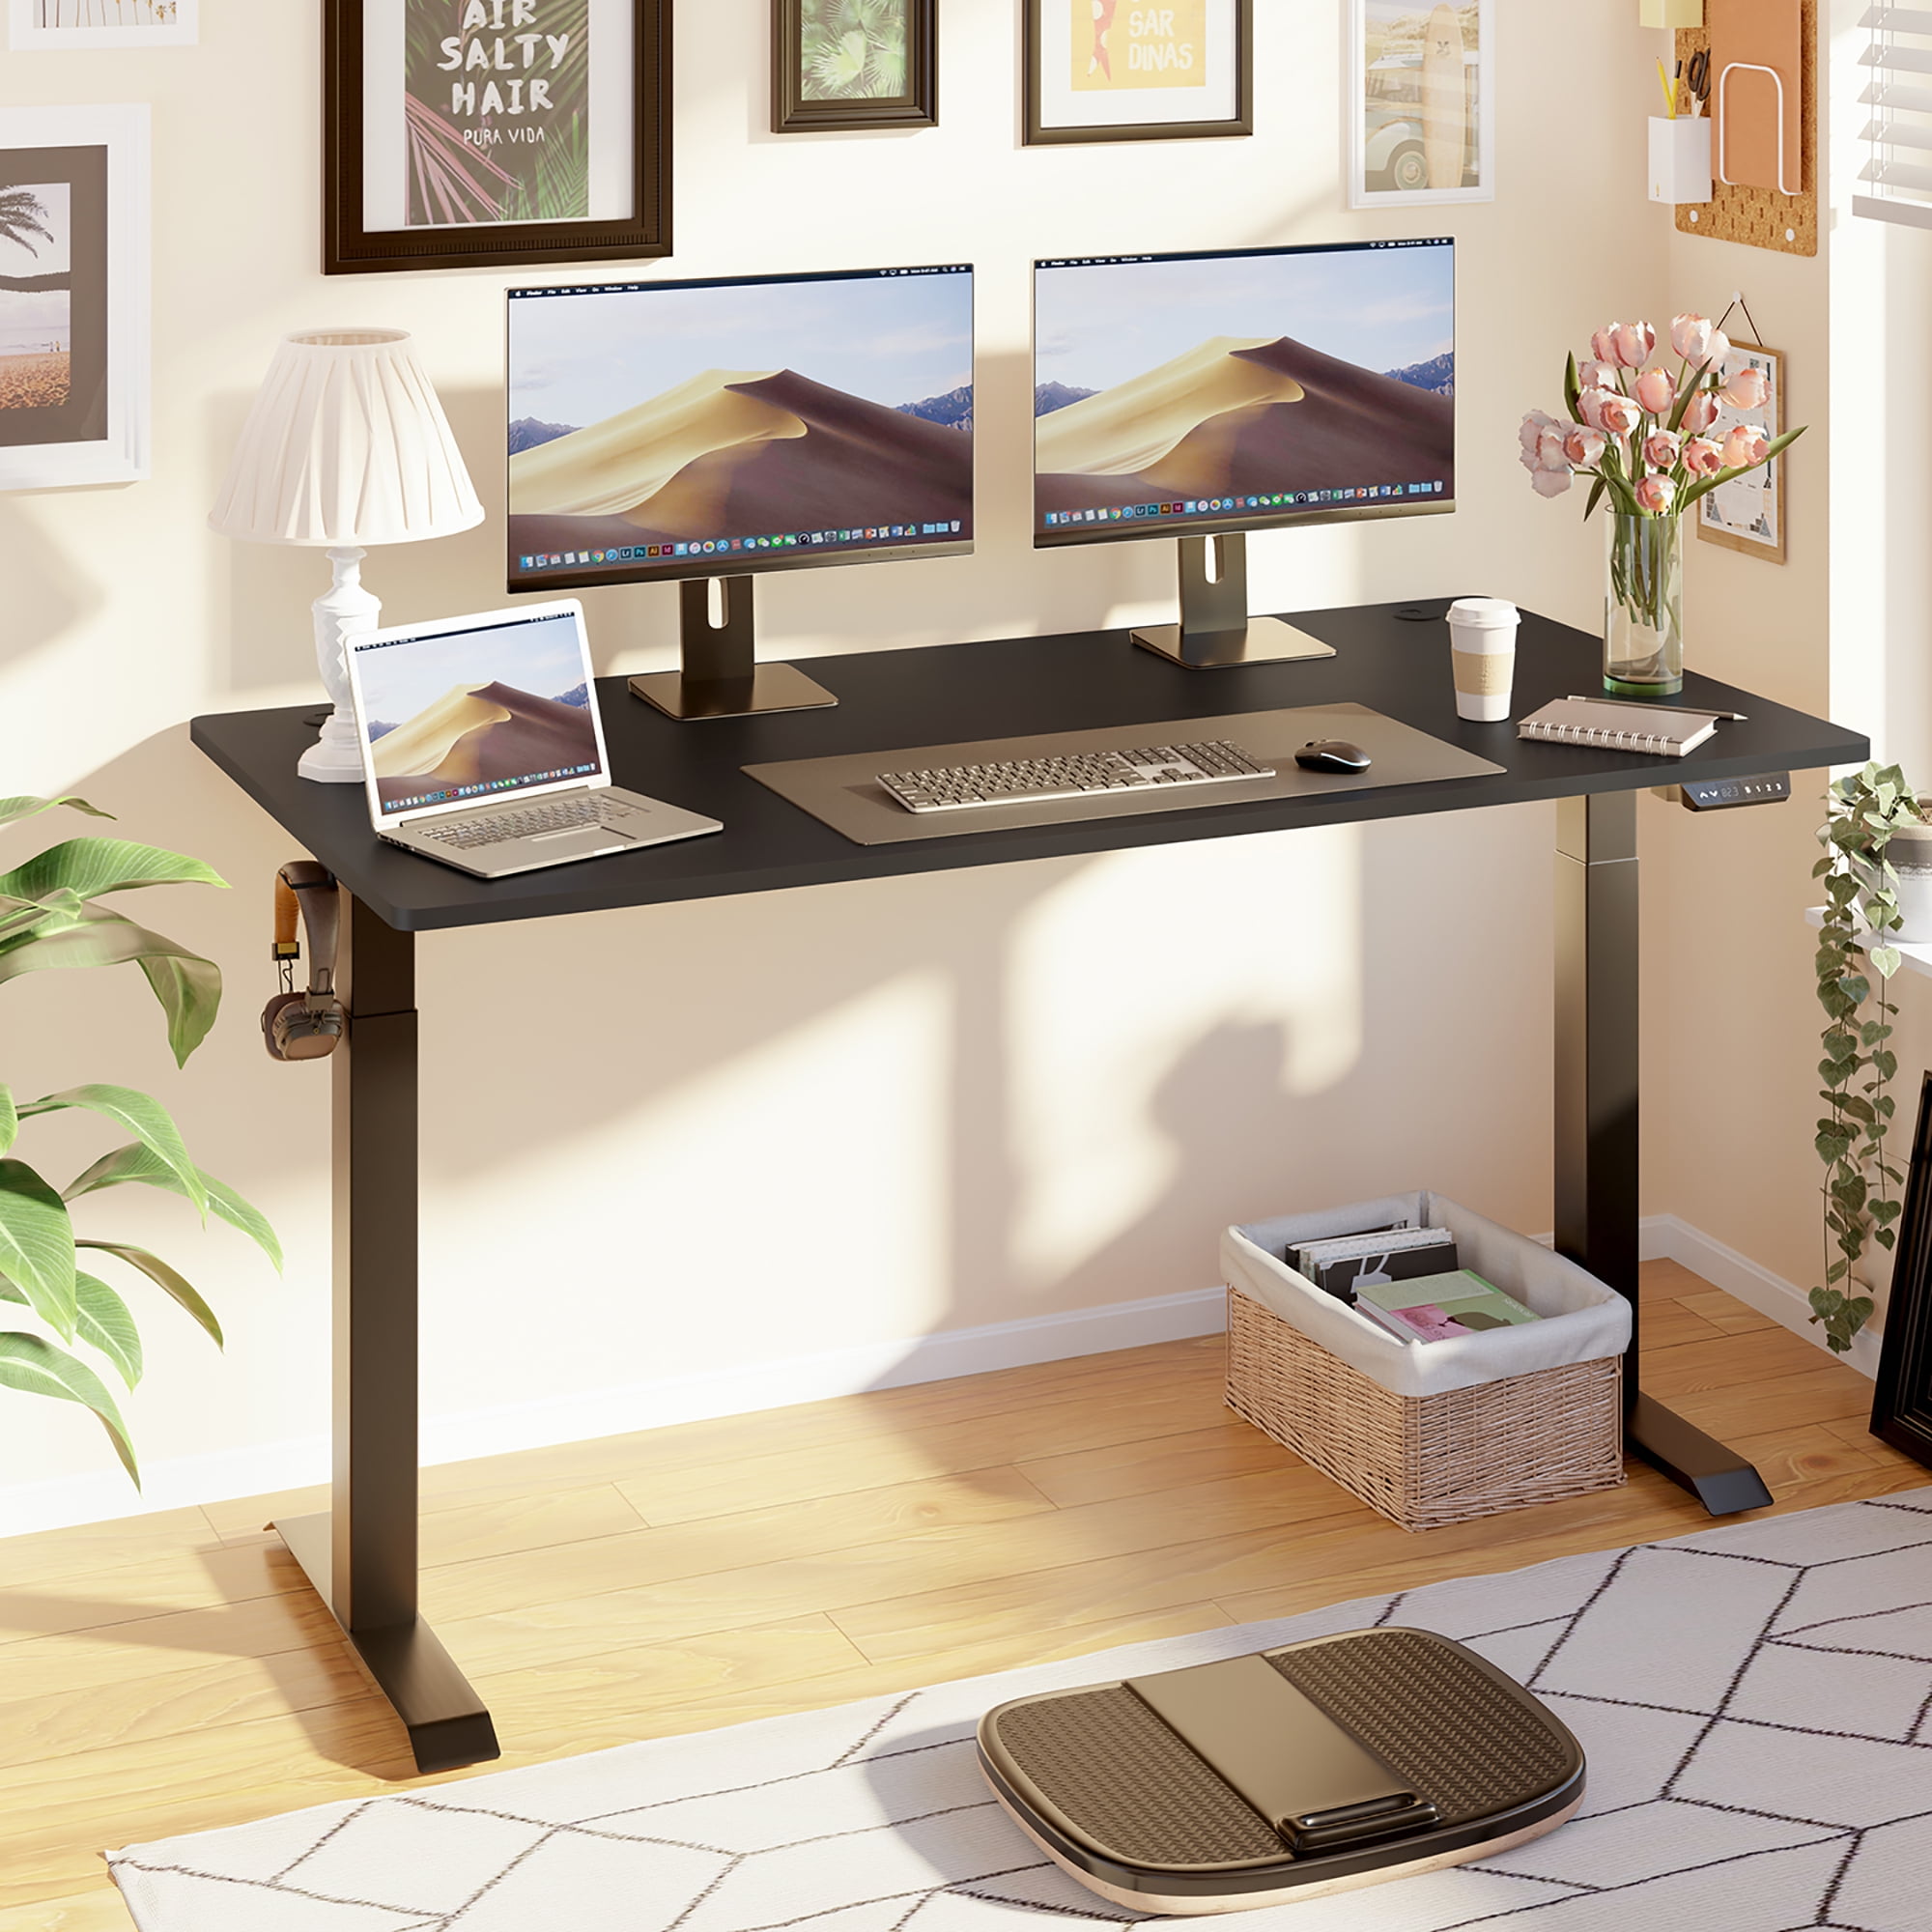 Studio Designs ADAPTA Walnut Desk 410380 for sale online 